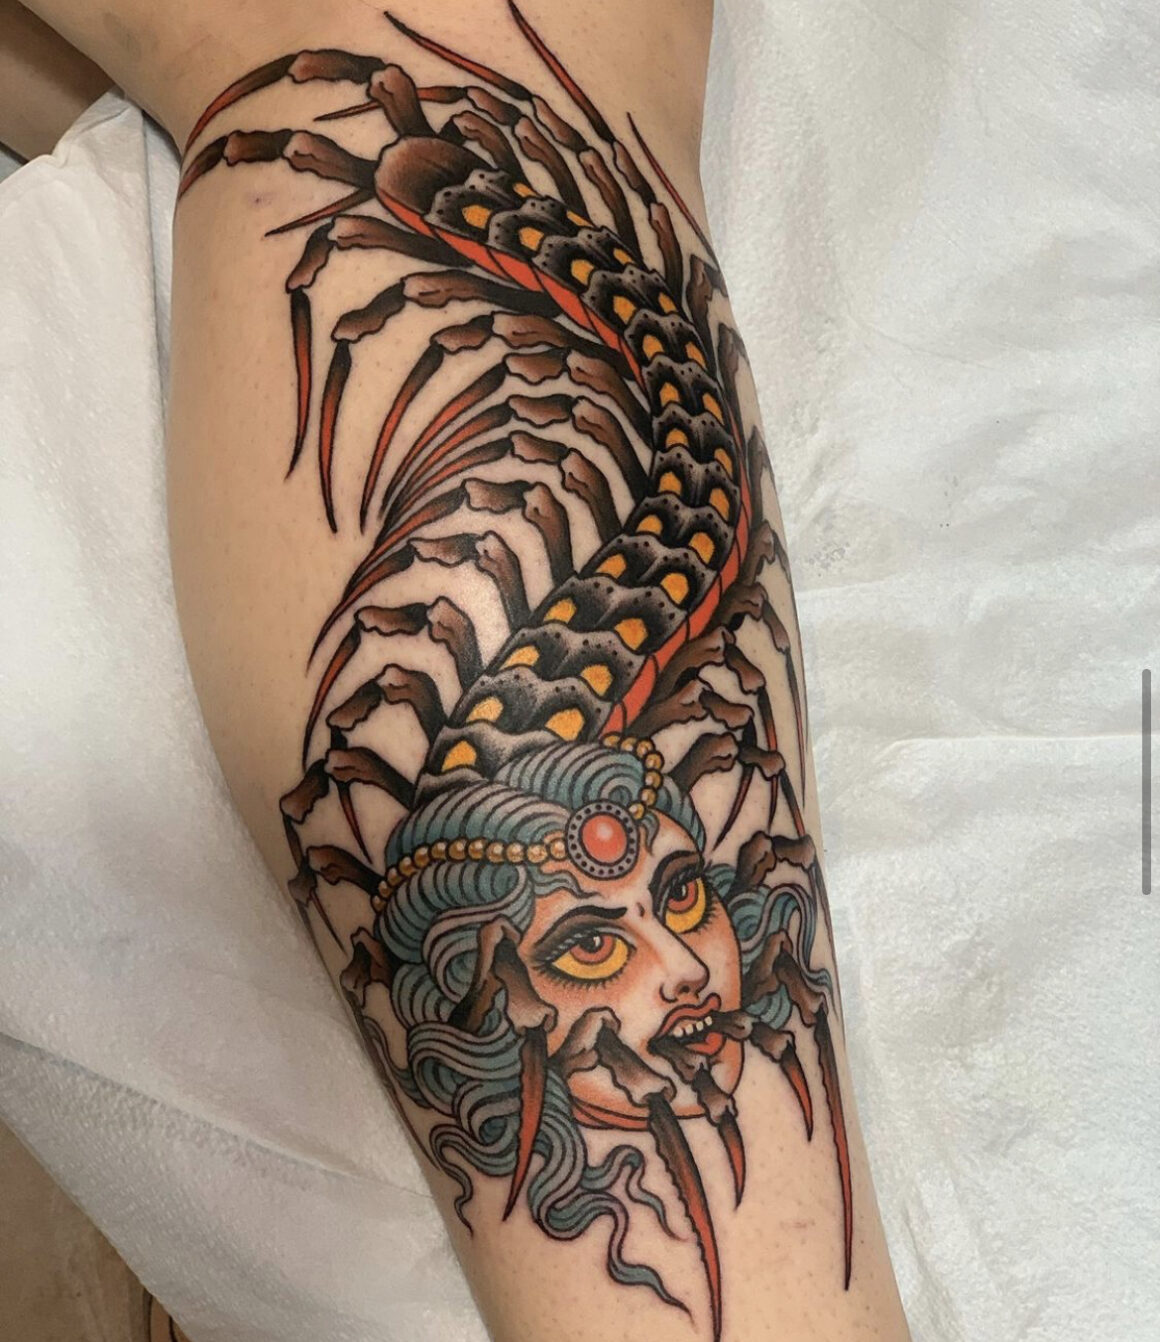 Gordon Combs, Tattoo Smile, Portland, USA